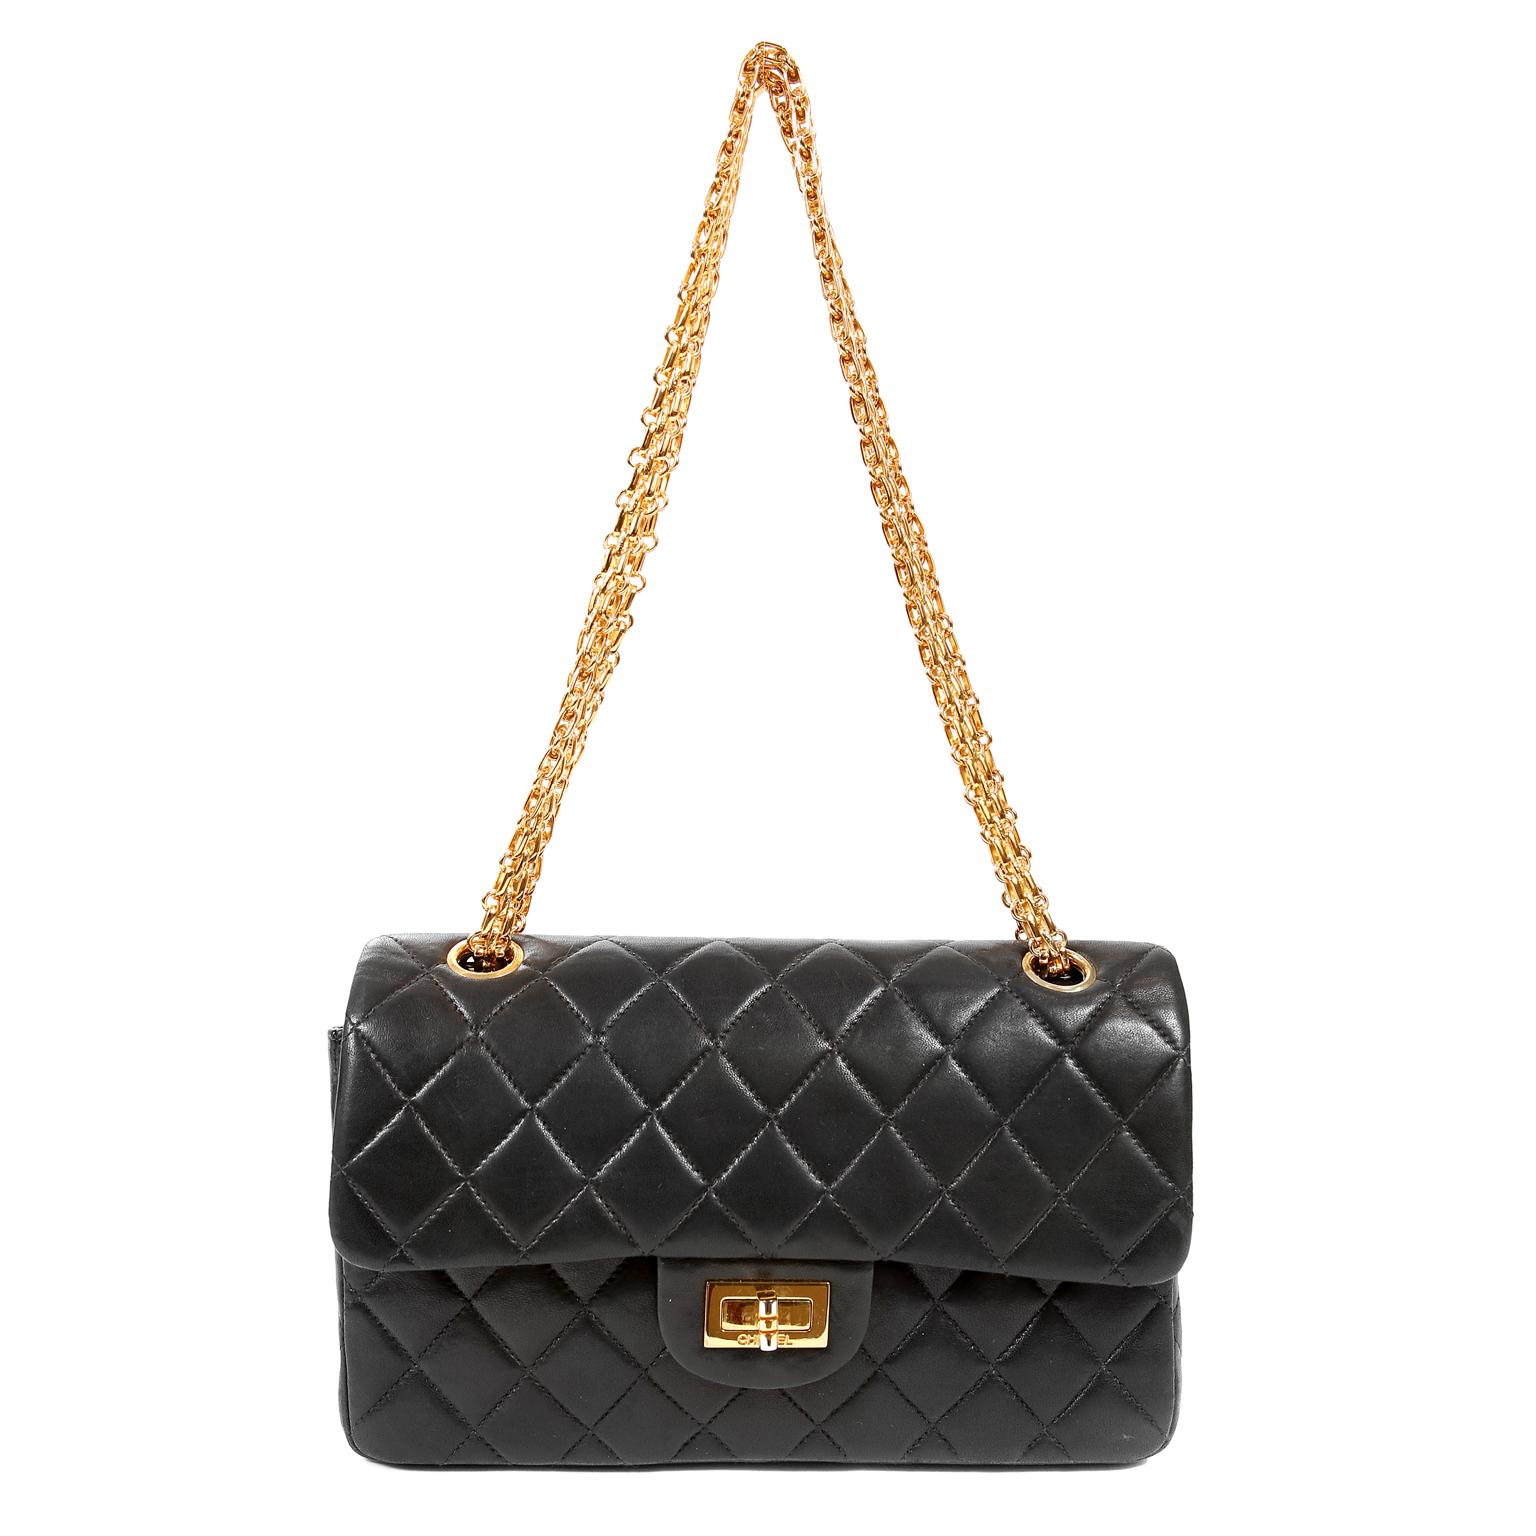 Chanel Black Lambskin 2.55 Reissue Medium Flap Bag with Gold Hardware 7